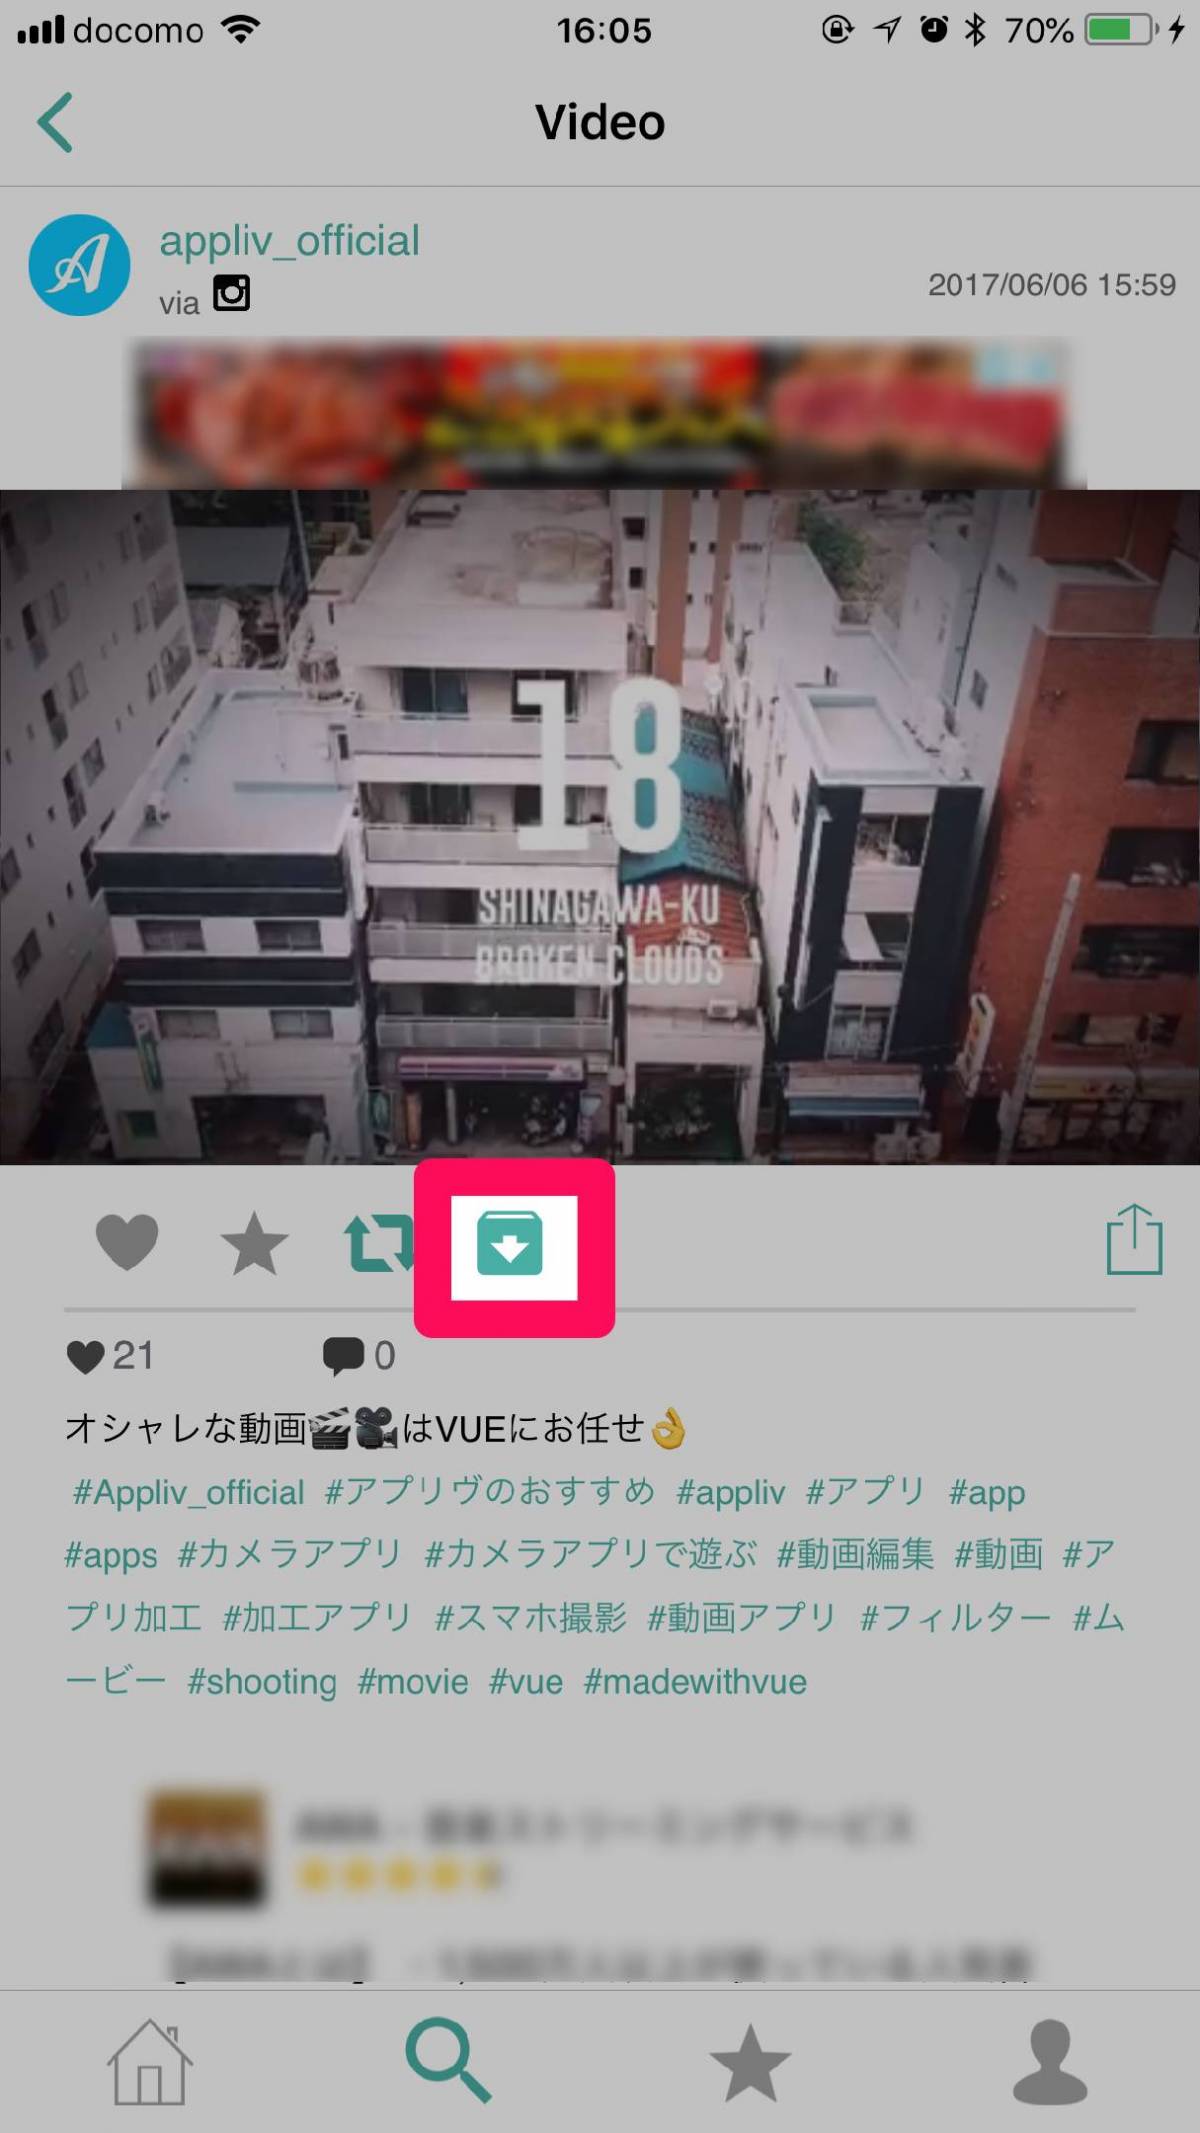 Instagram 画像 動画 ストーリーを保存する方法 Iphone Android Pc の画像 2枚目 Appliv Topics